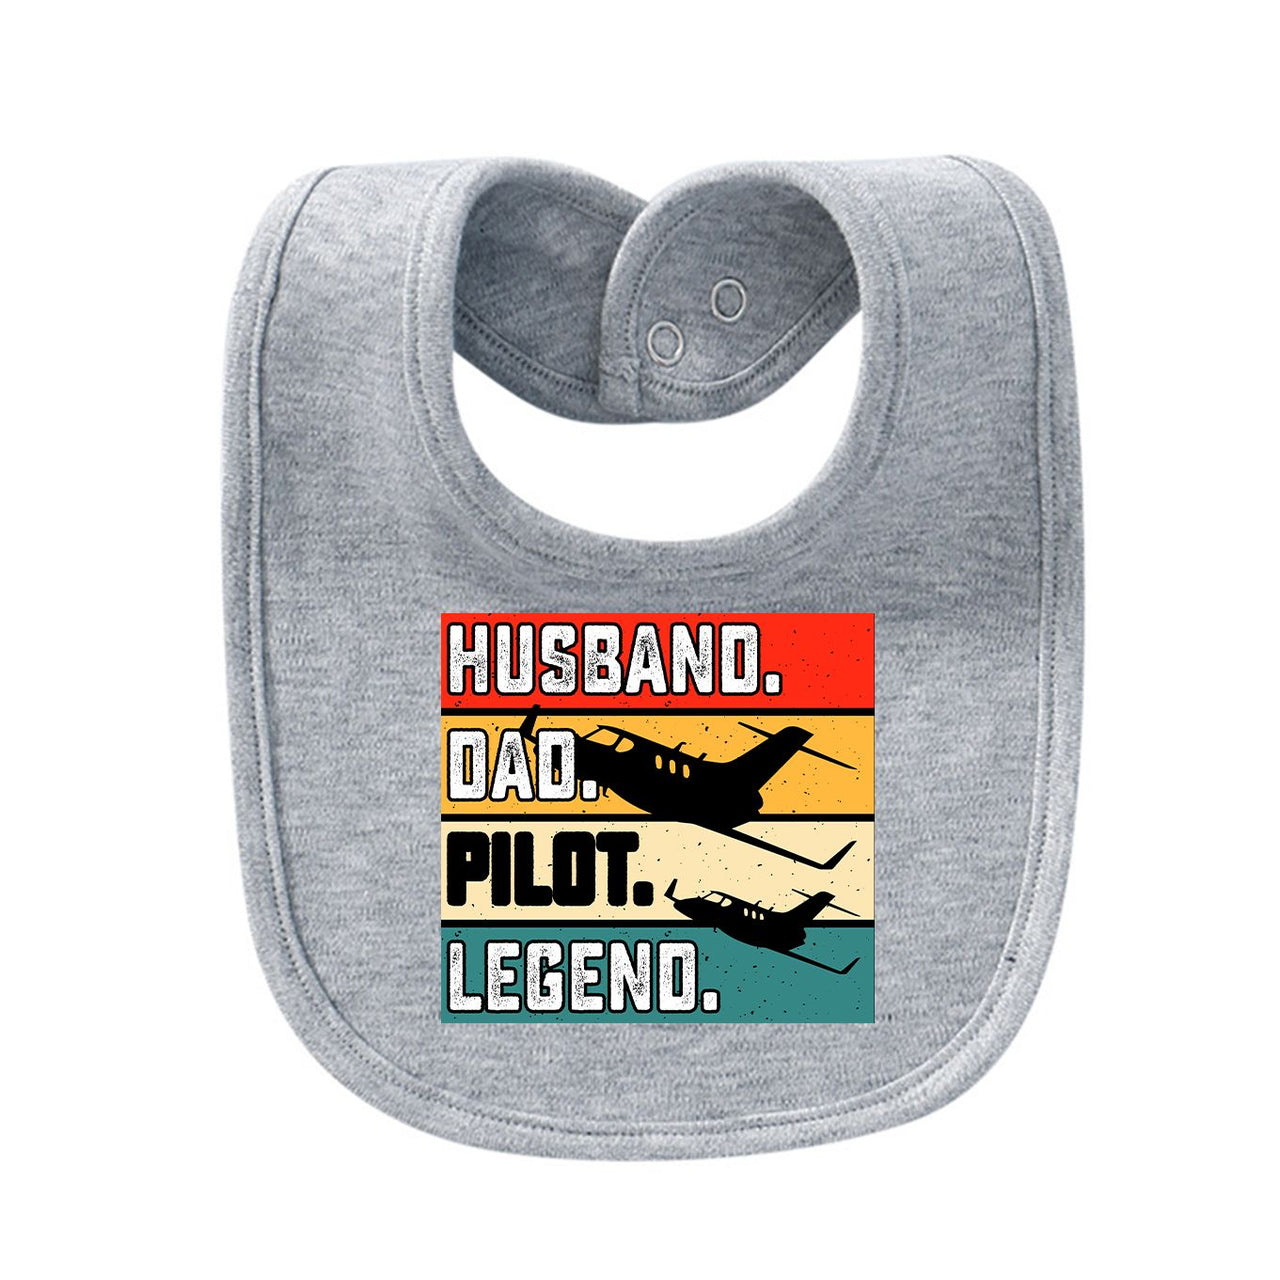 Husband & Dad & Pilot & Legend Designed Baby Saliva & Feeding Towels